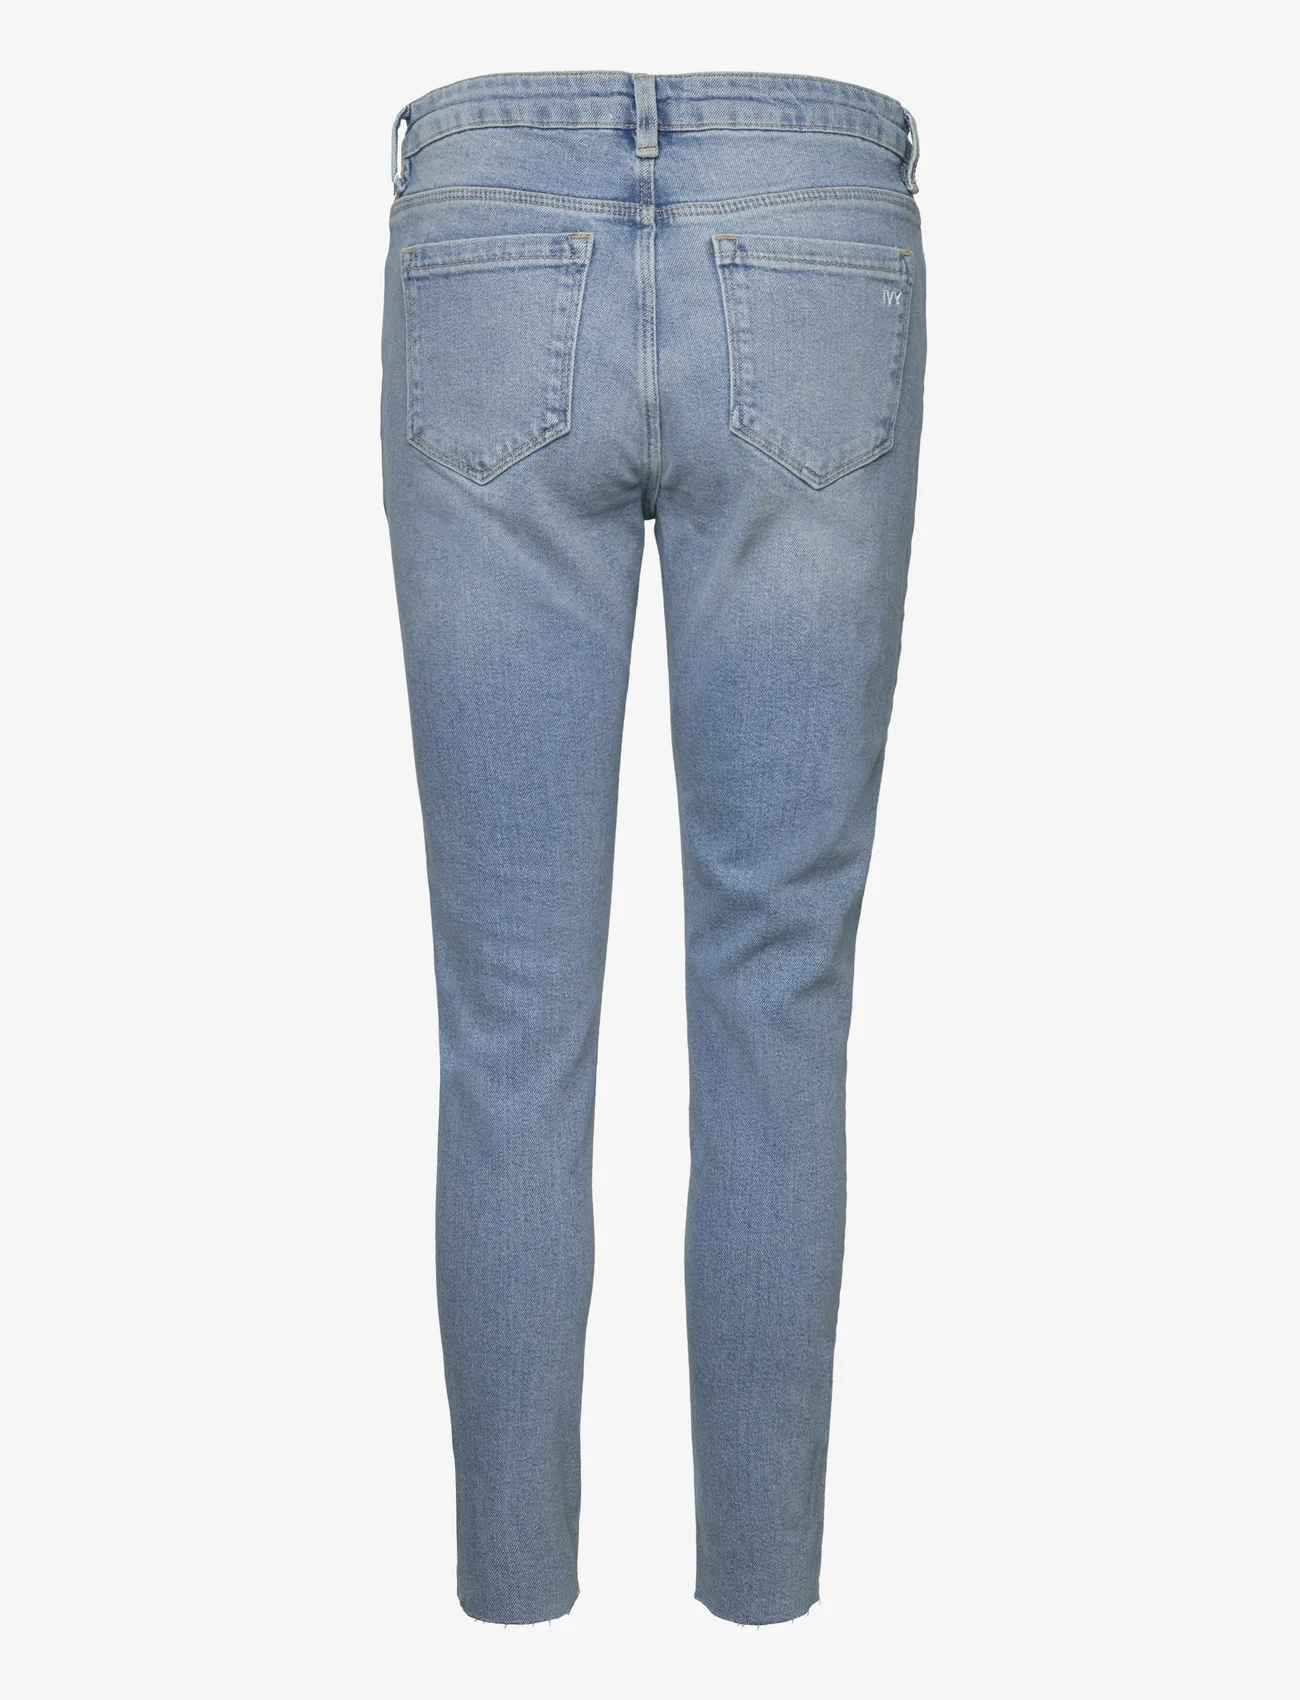 IVY Copenhagen - IVY-Alexa Earth Jeans Wash Miami - slim fit trousers - denim blue - 1